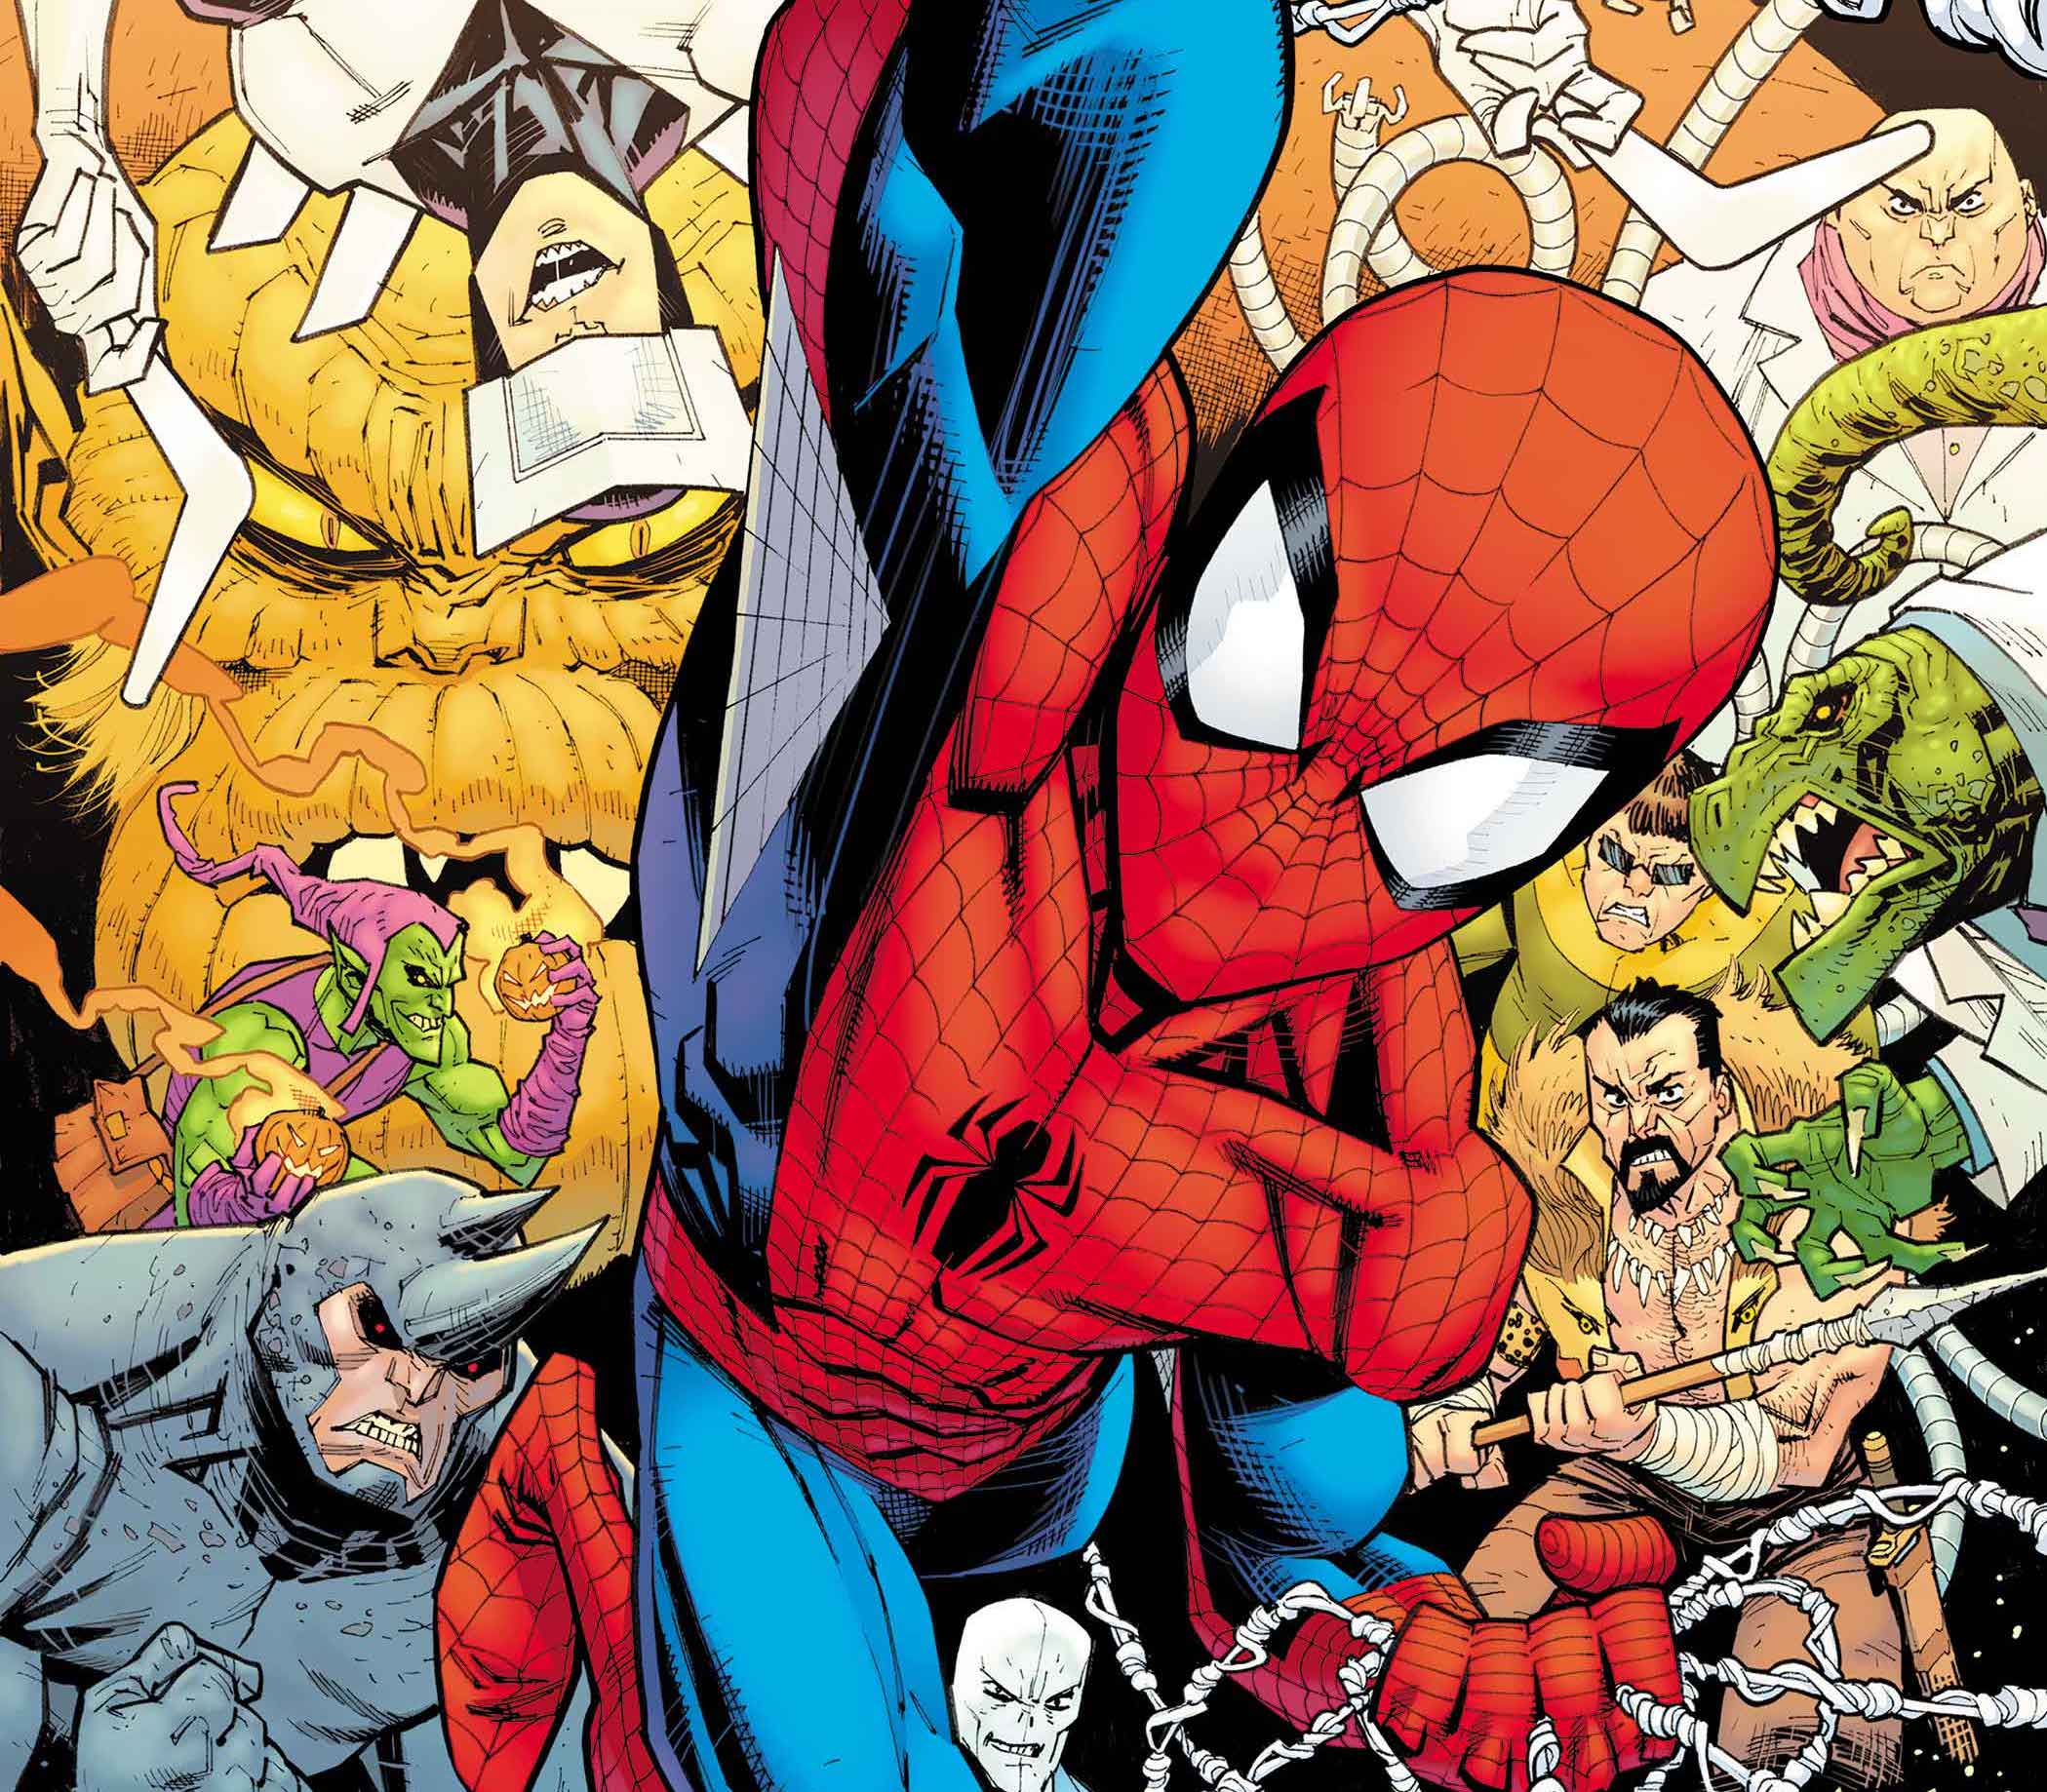 Marvel Comics celebrating 'Amazing Spider-Man' #850 with the return of Norman Osborn